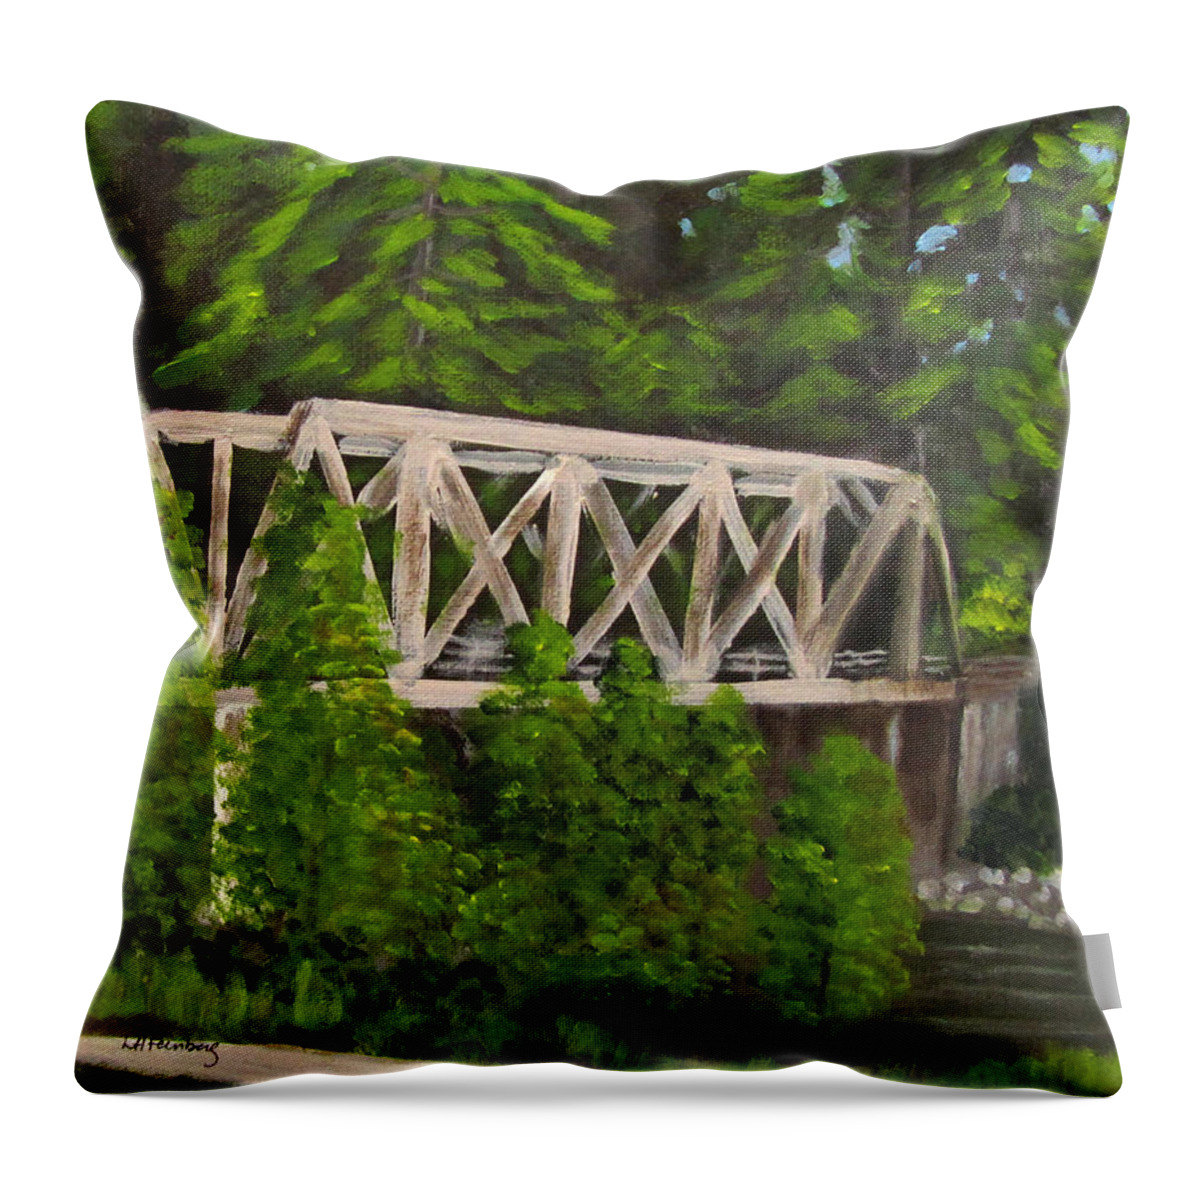 Landscape Throw Pillow featuring the painting Sewalls Falls Bridge by Linda Feinberg